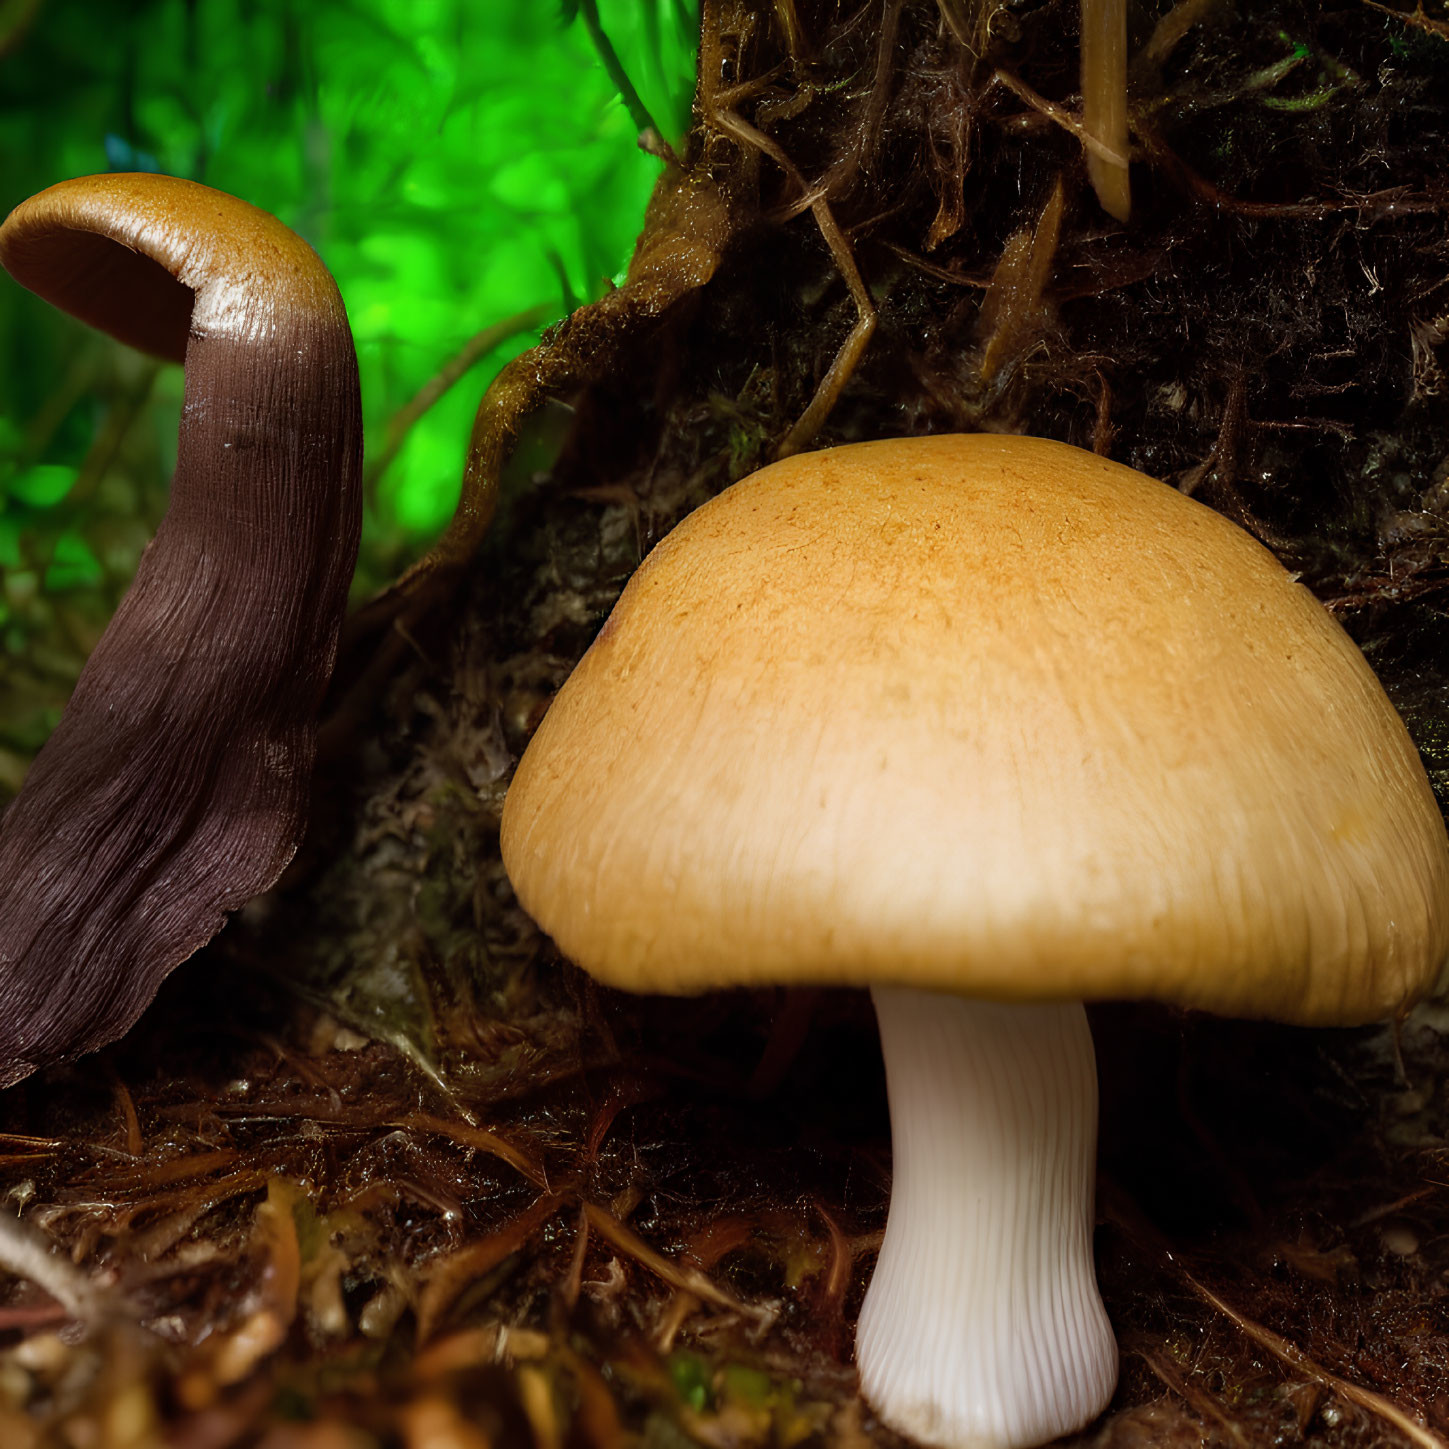 Brown mushroom and slug close-up in natural setting